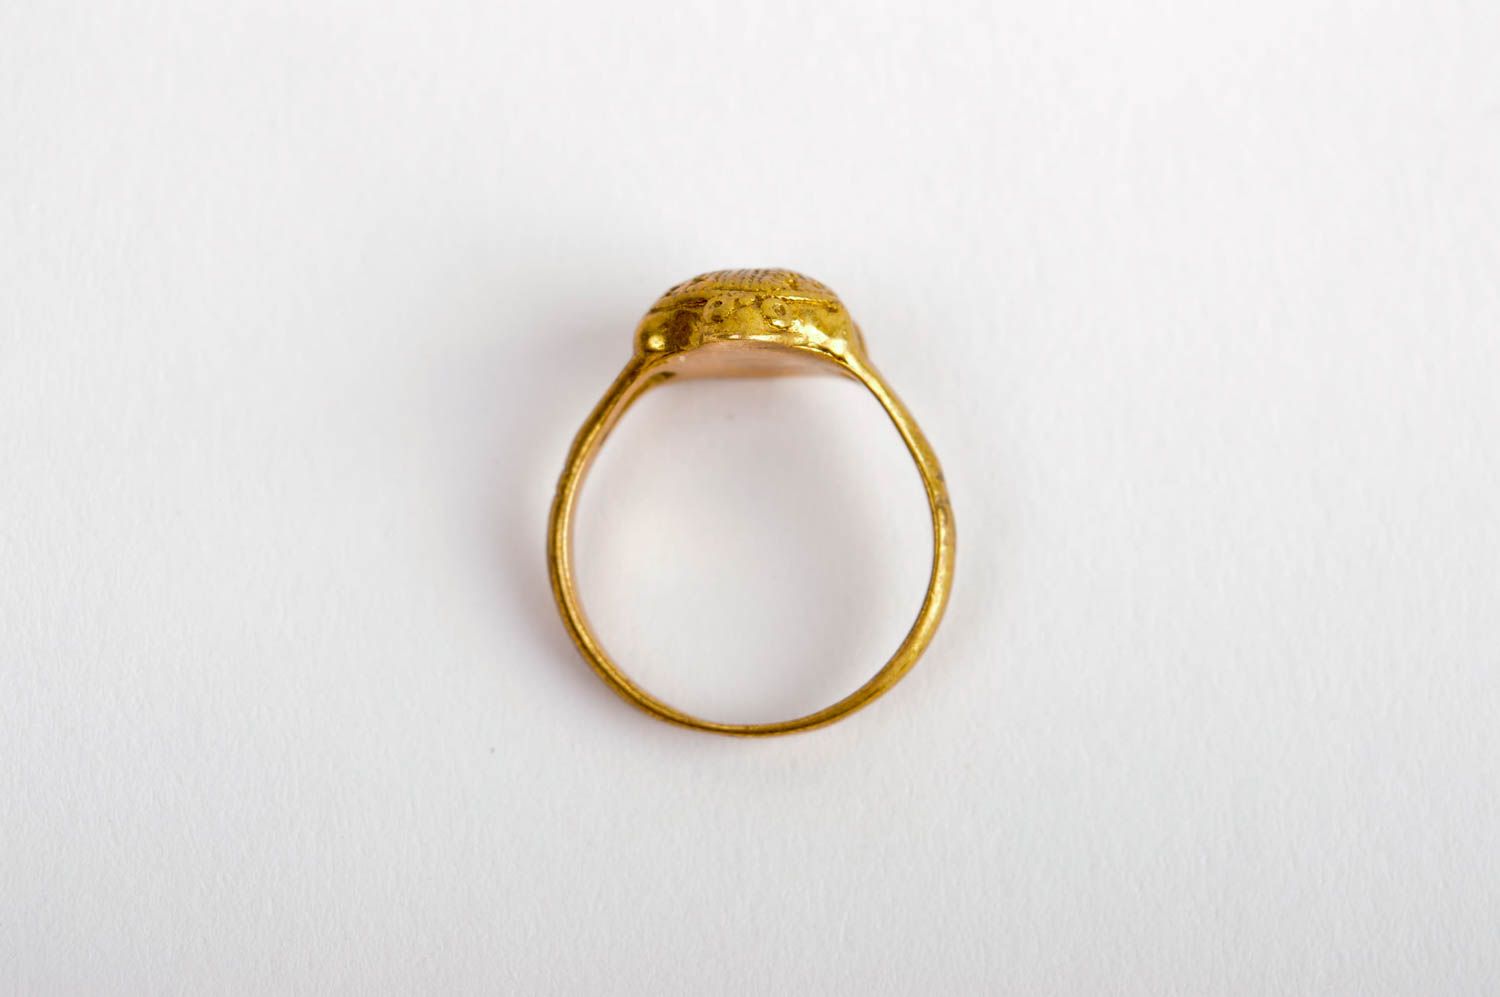 Stylish handmade metal ring beautiful jewellery cool jewelry designs gift ideas photo 5